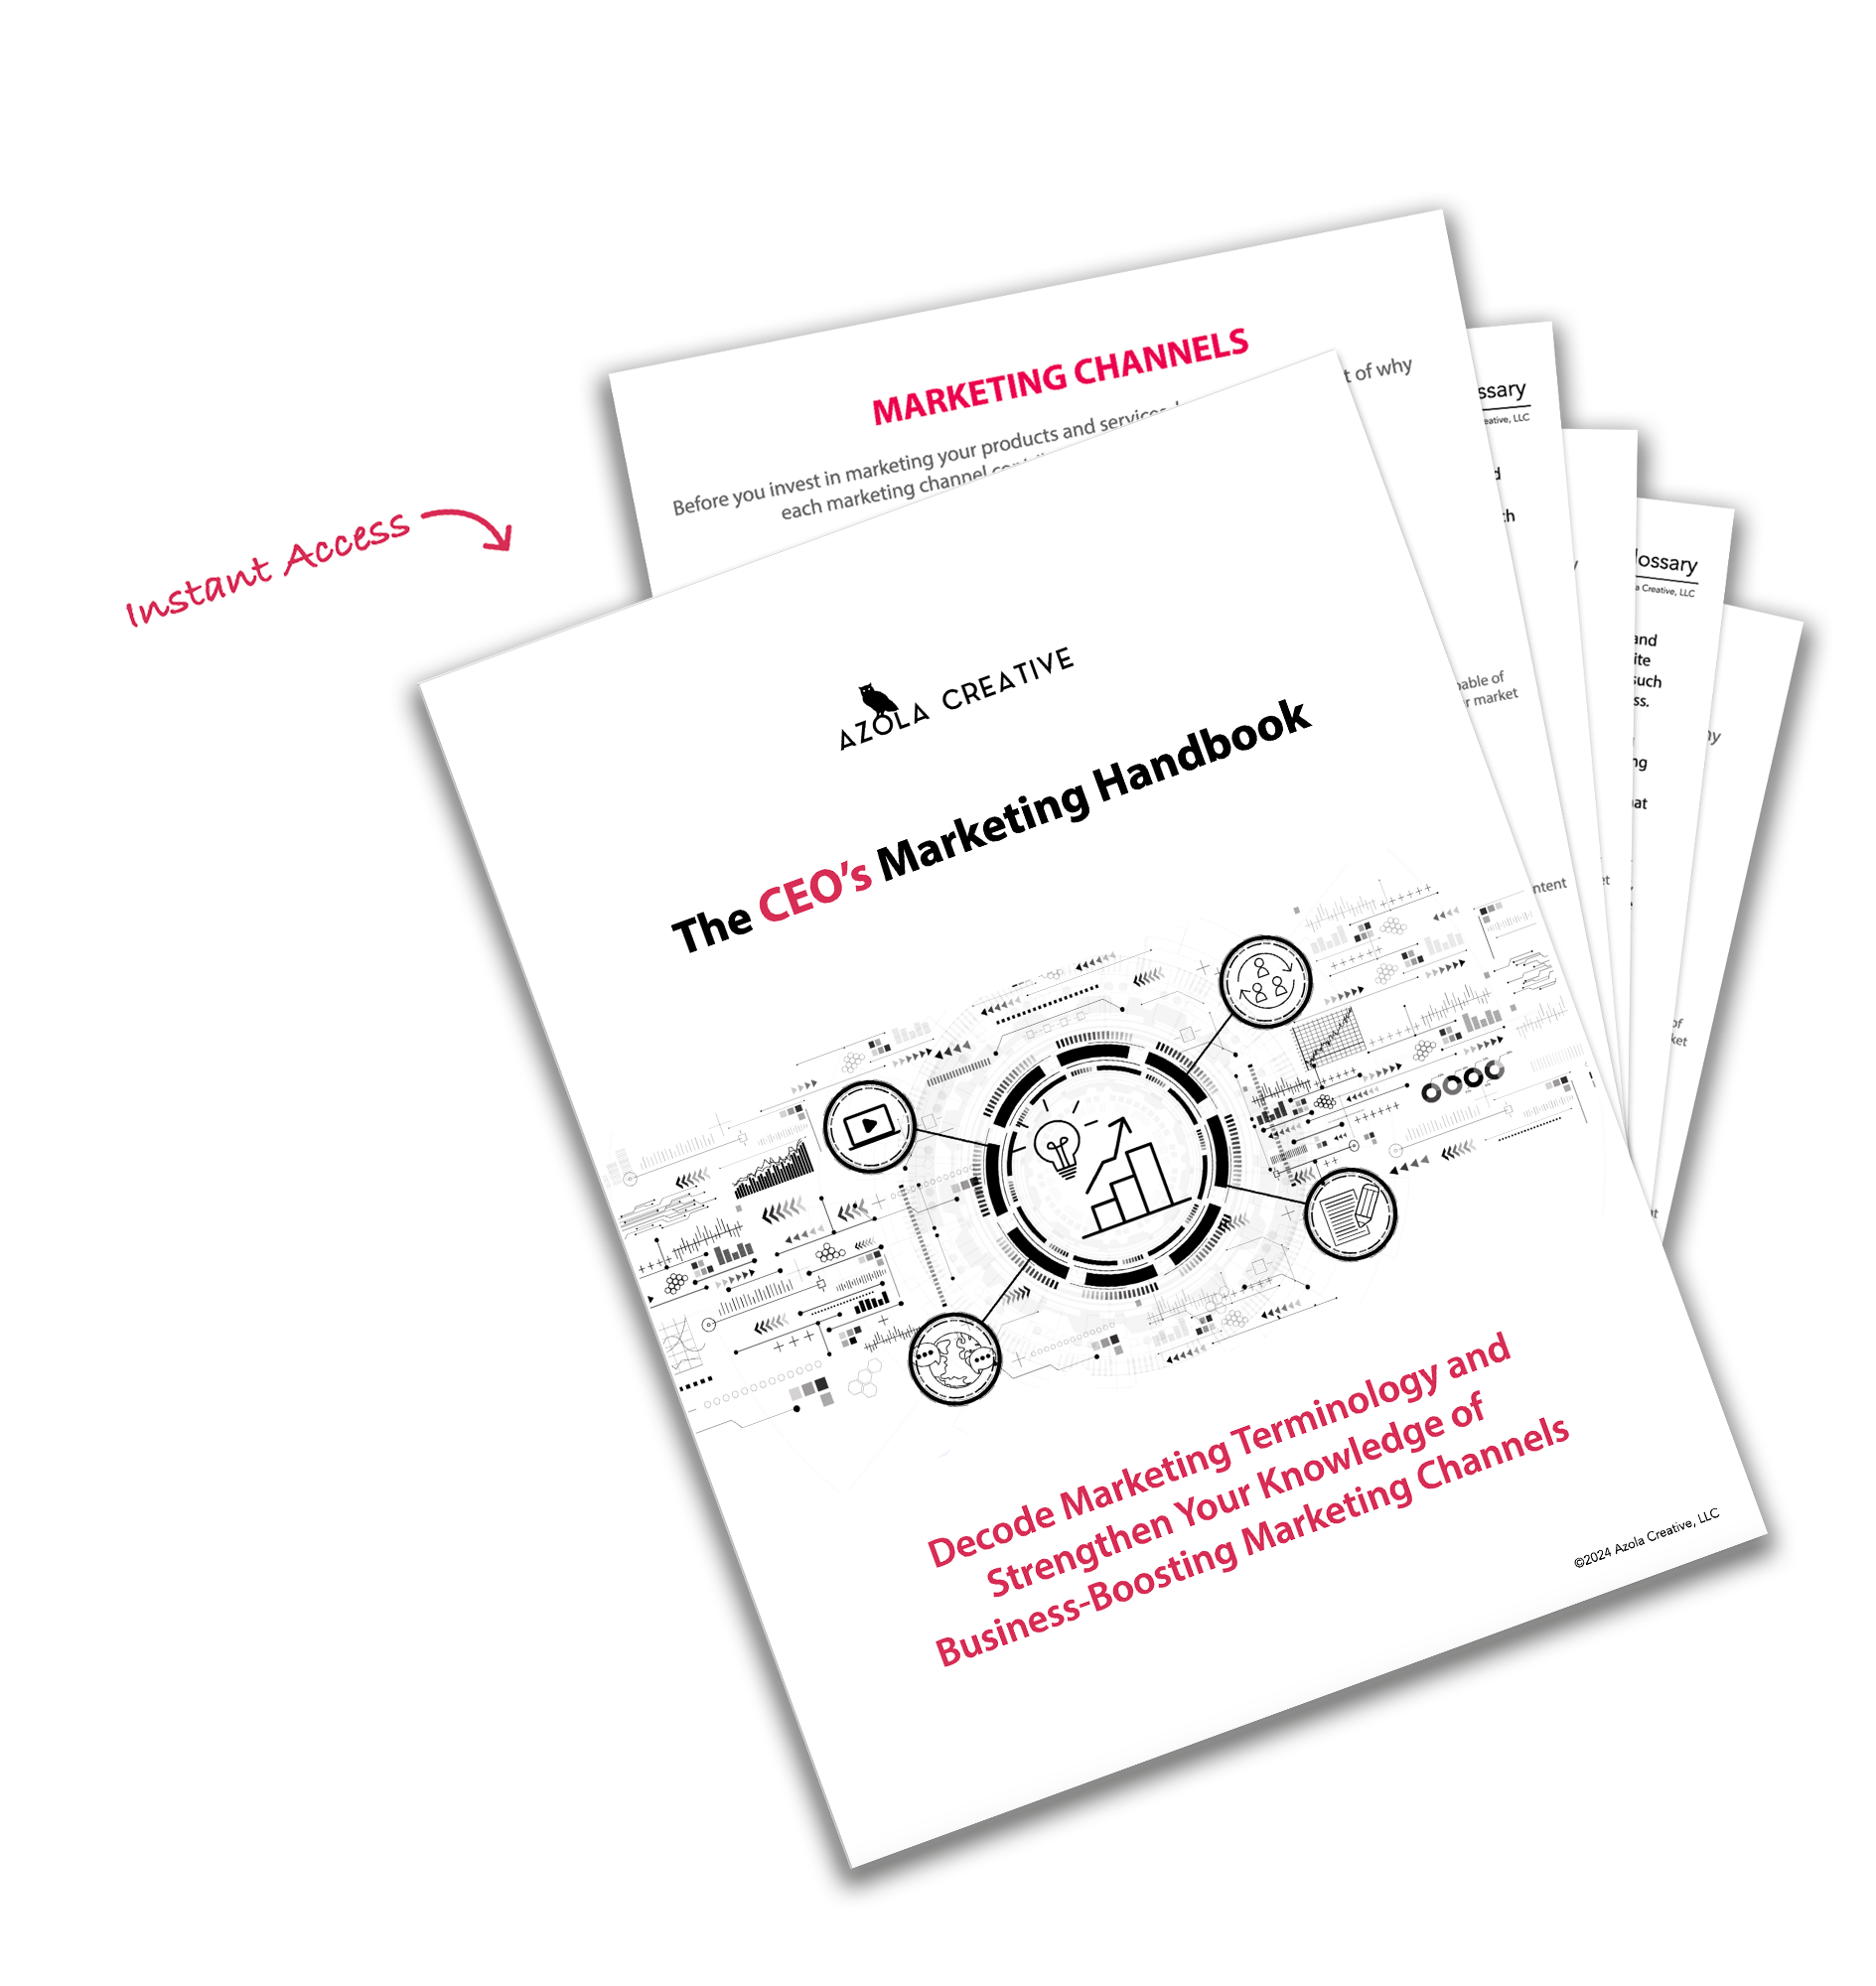 The CEO's Marketing Handbook by Azola Creative